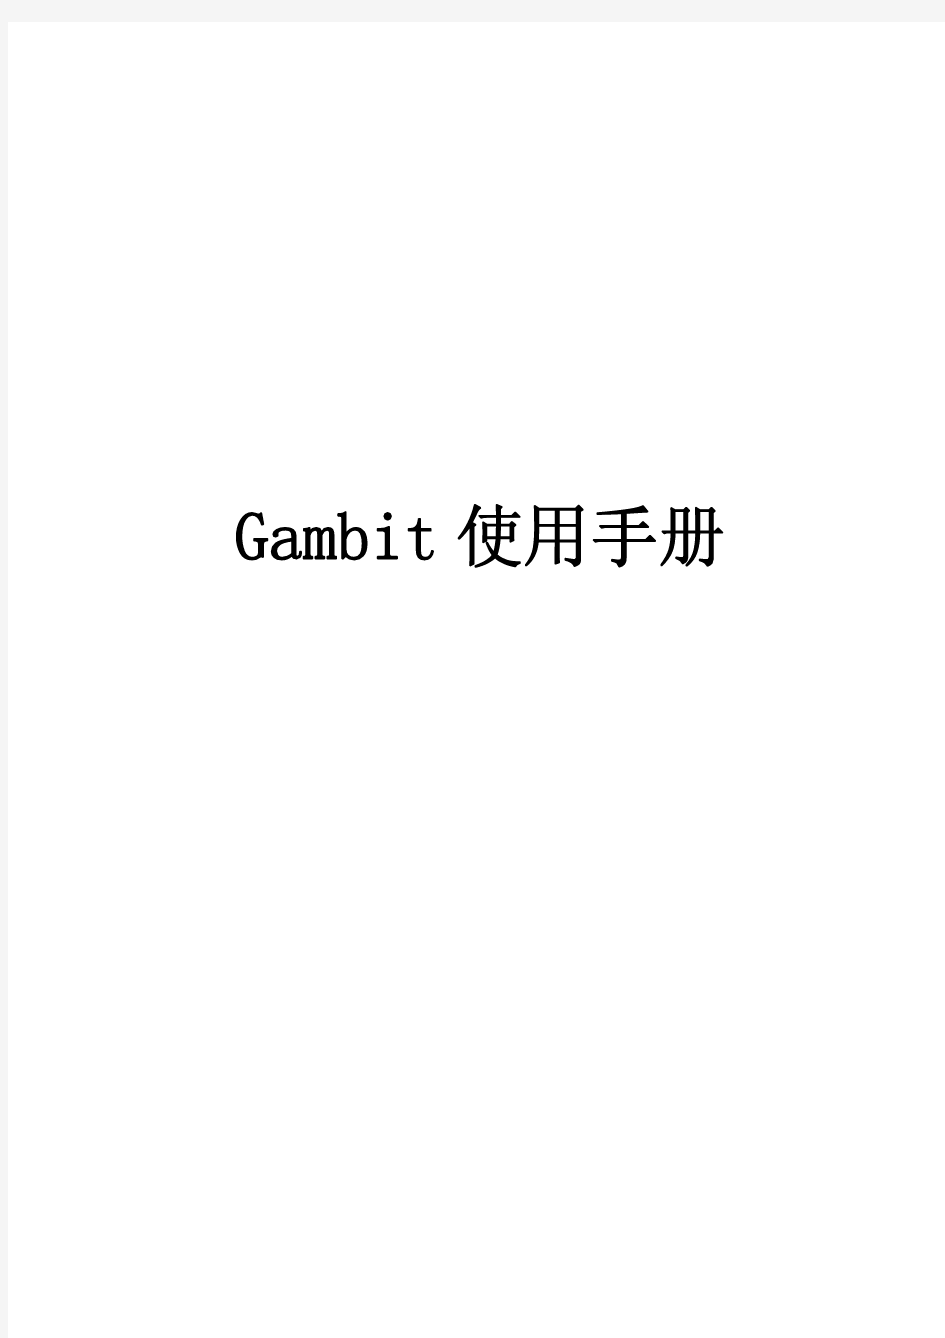 Gambit手册